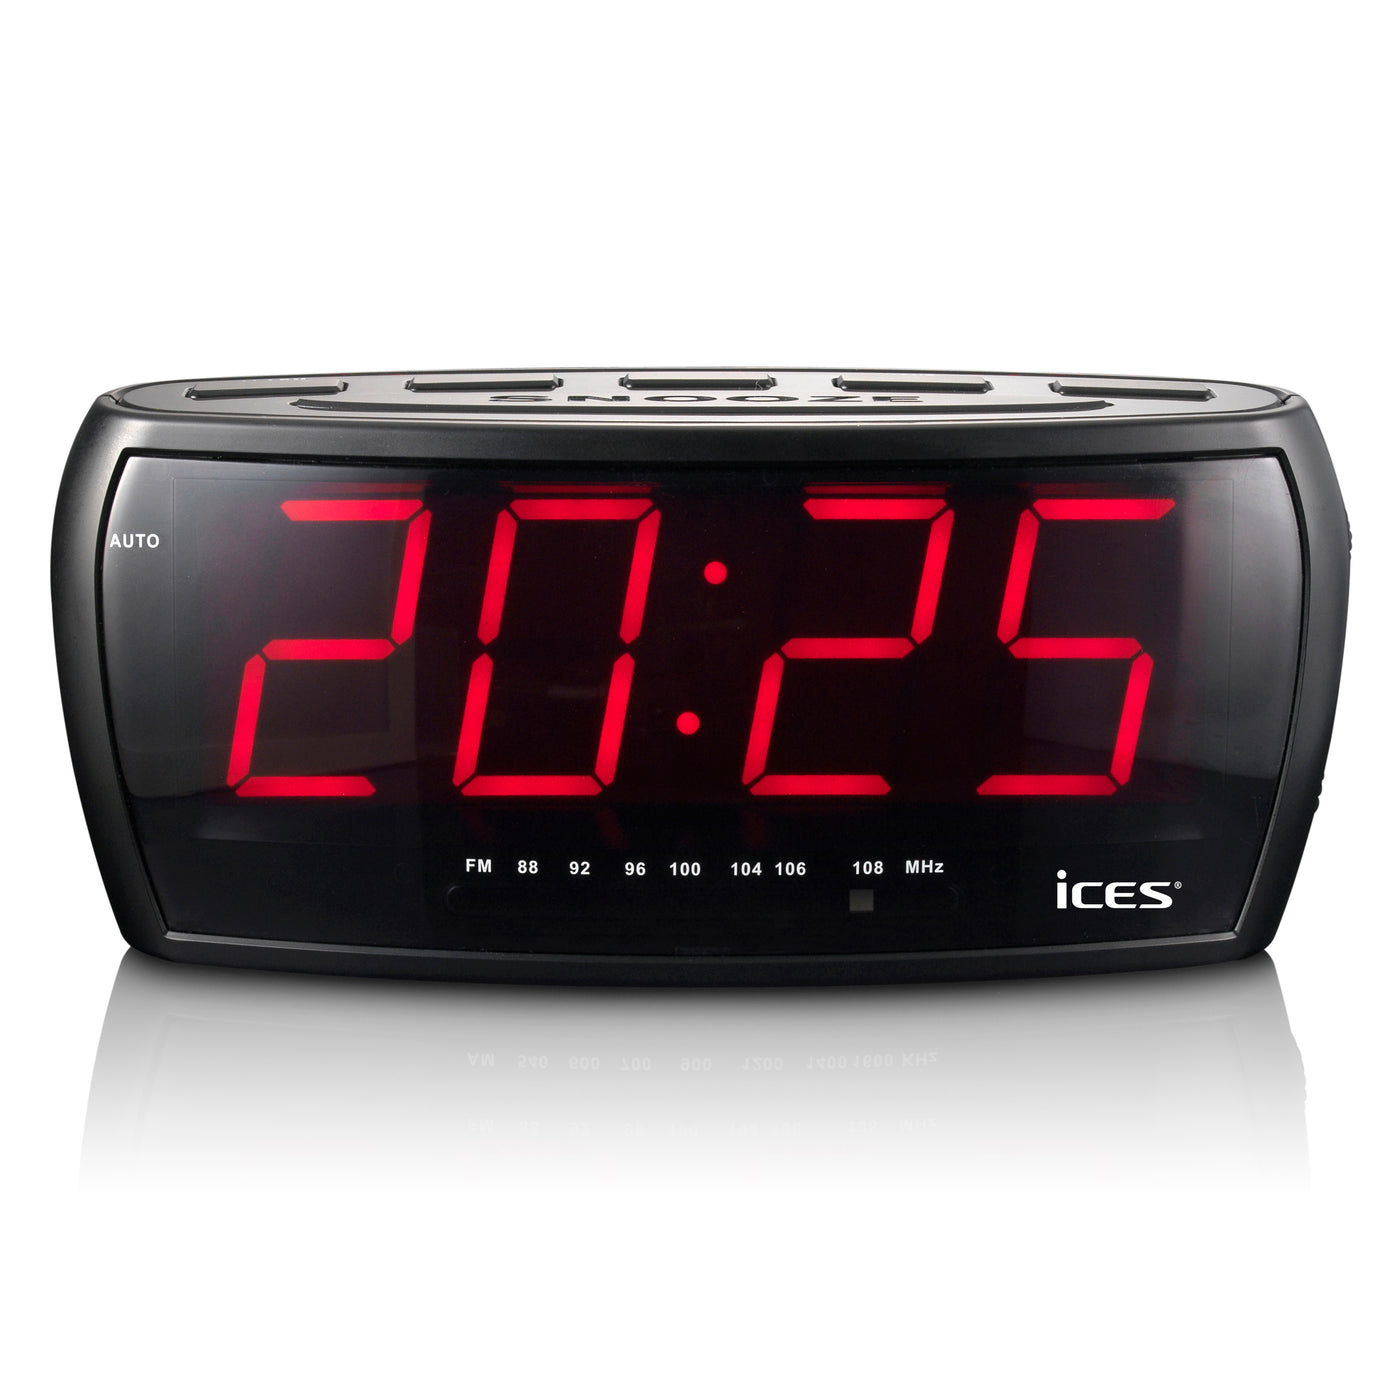 Ices ICR-230-1 - FM Uhrenradio, 1,8" Display - Schwarz